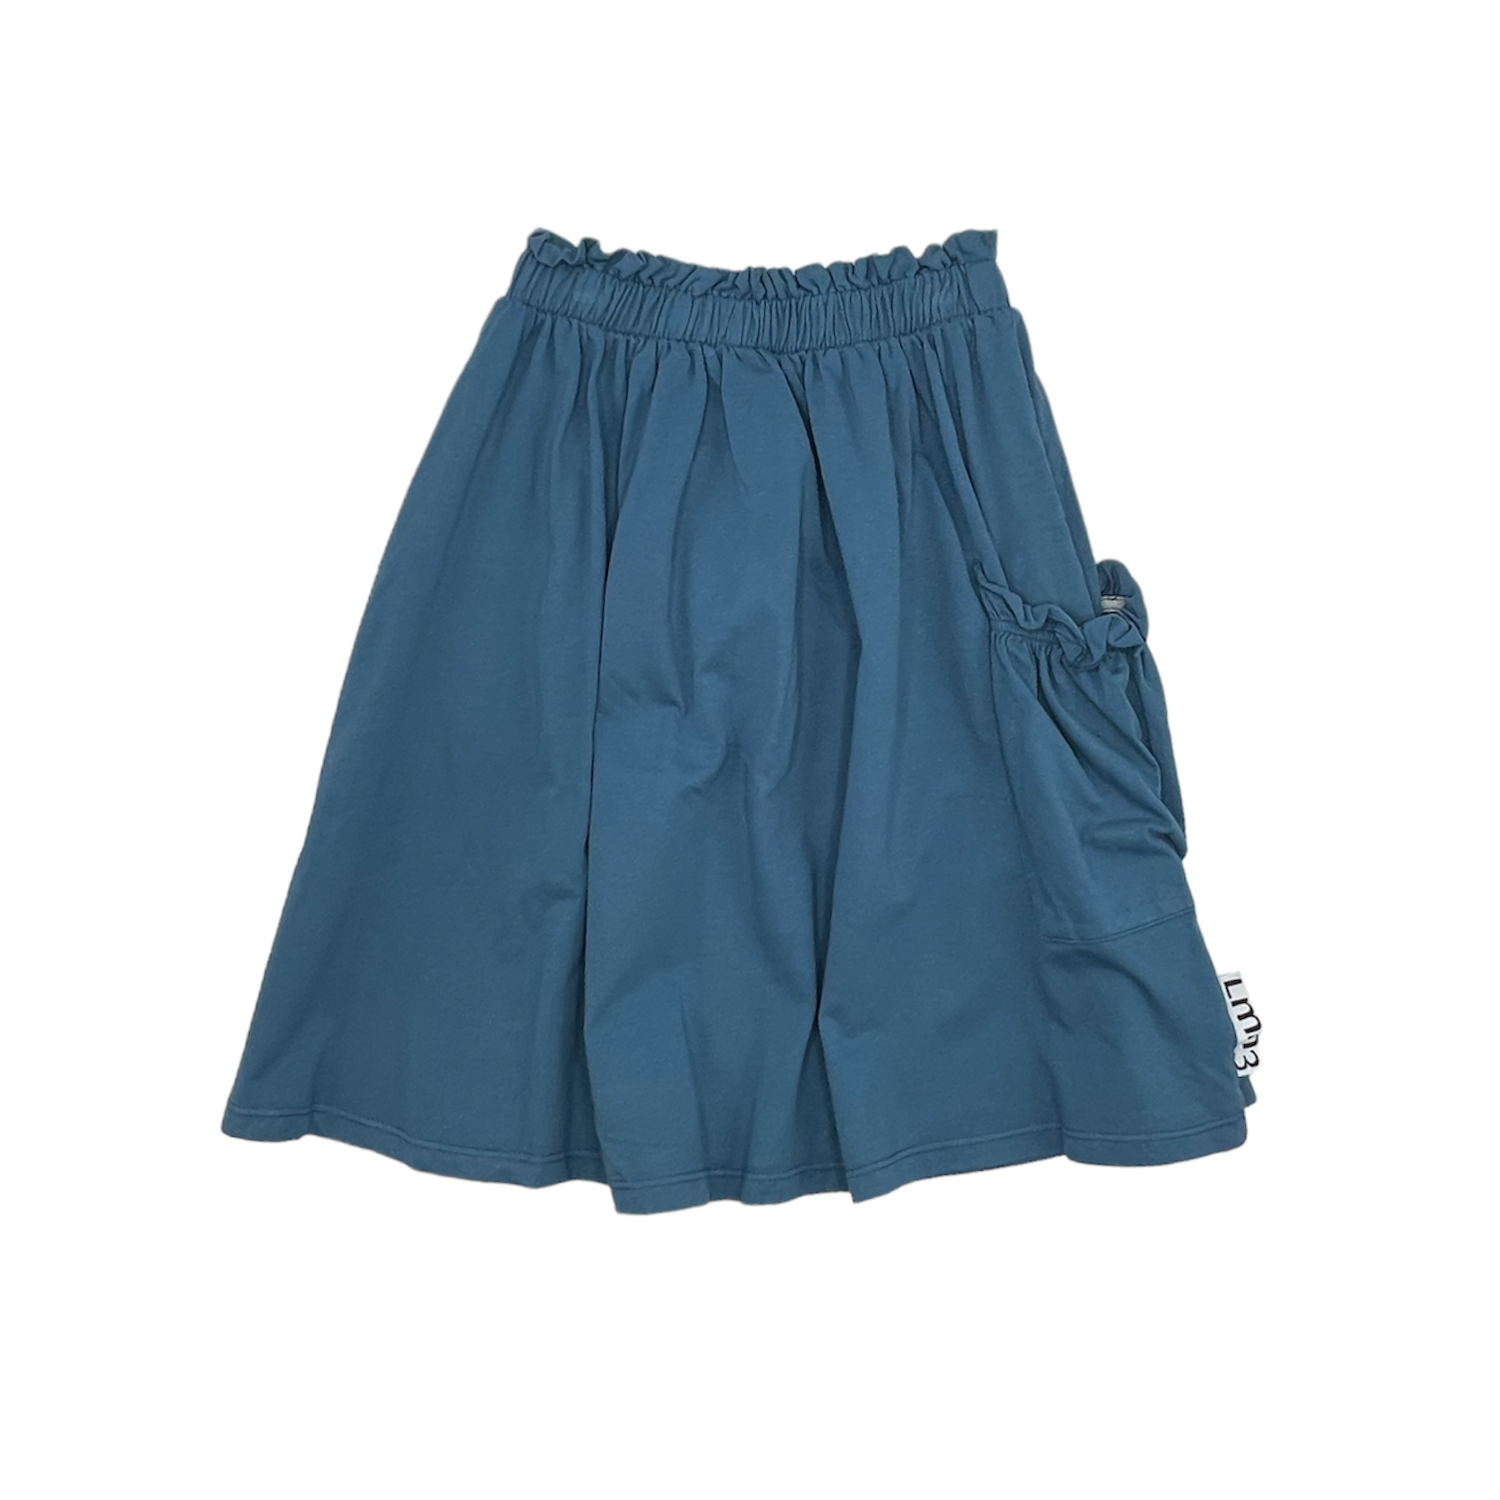 Lmn3 Pocket Skirt - Mallard Blue